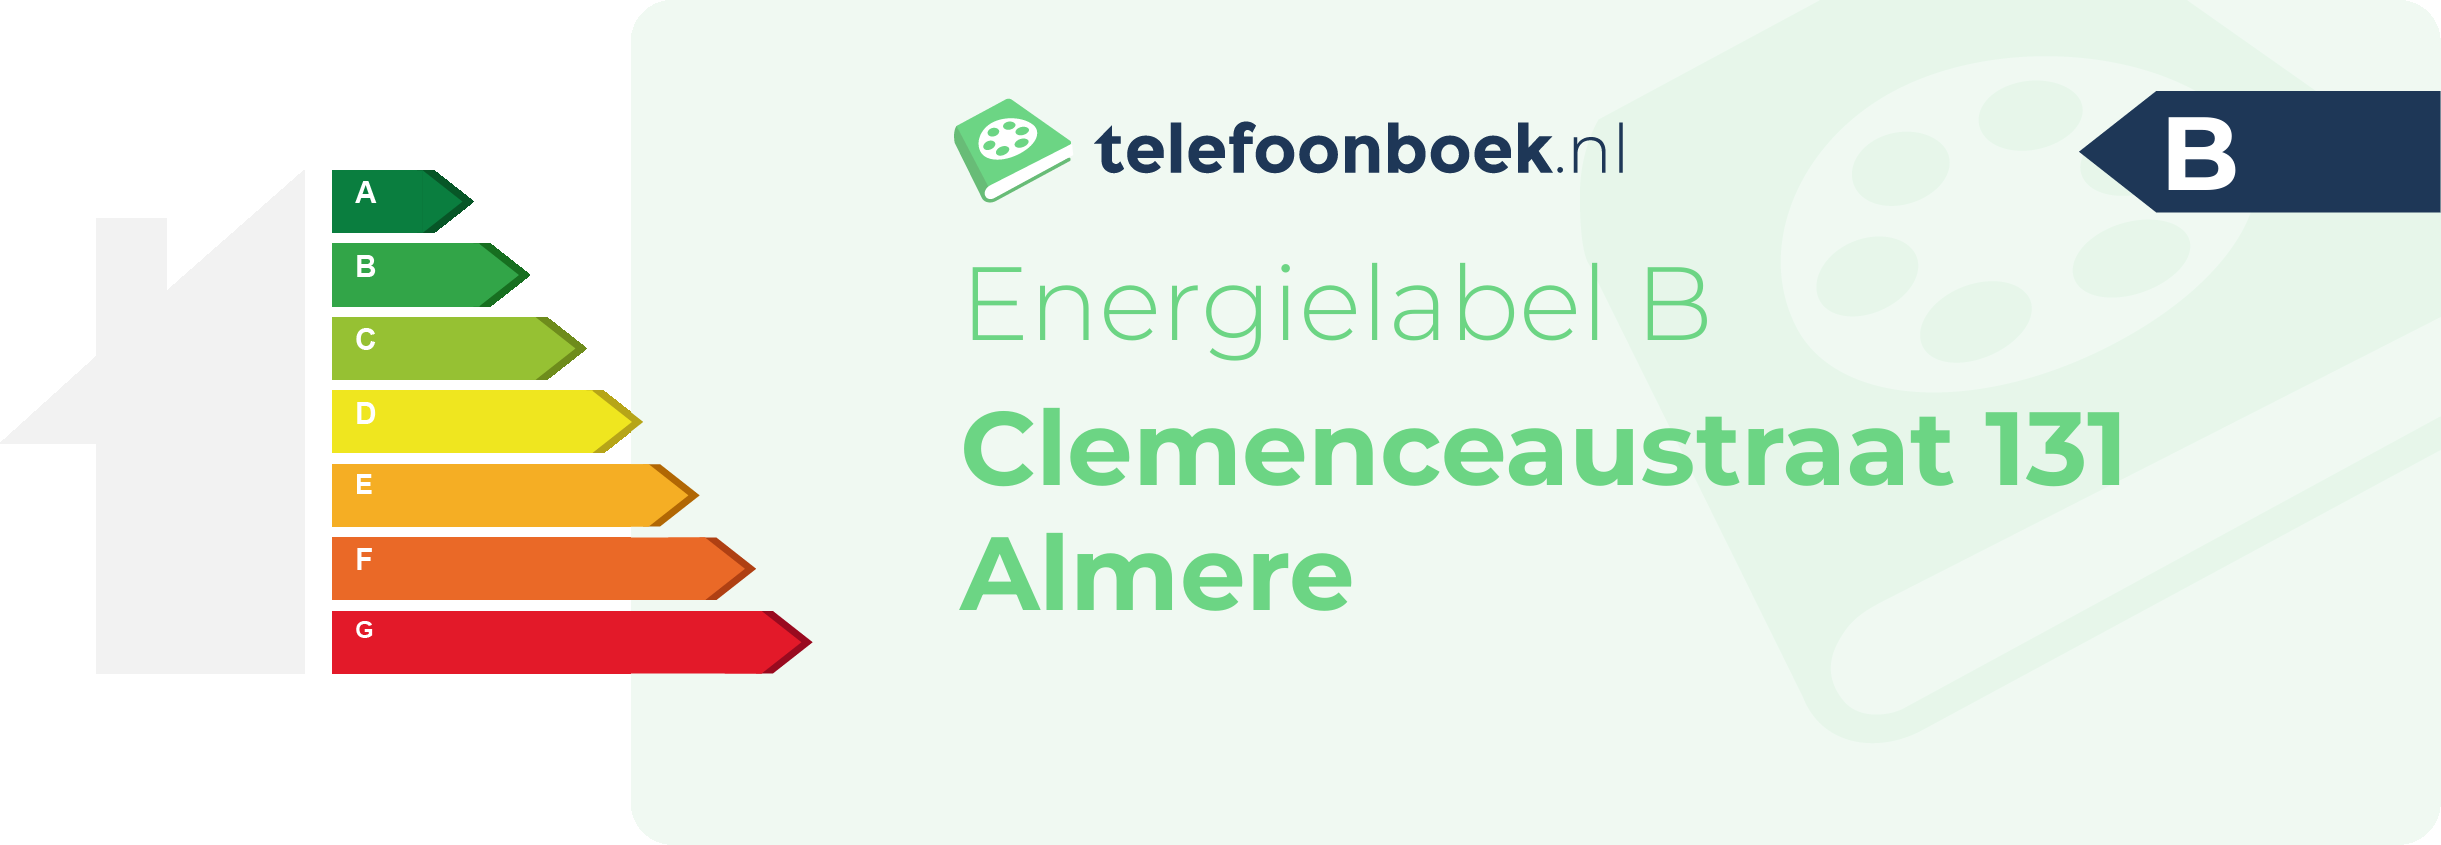 Energielabel Clemenceaustraat 131 Almere